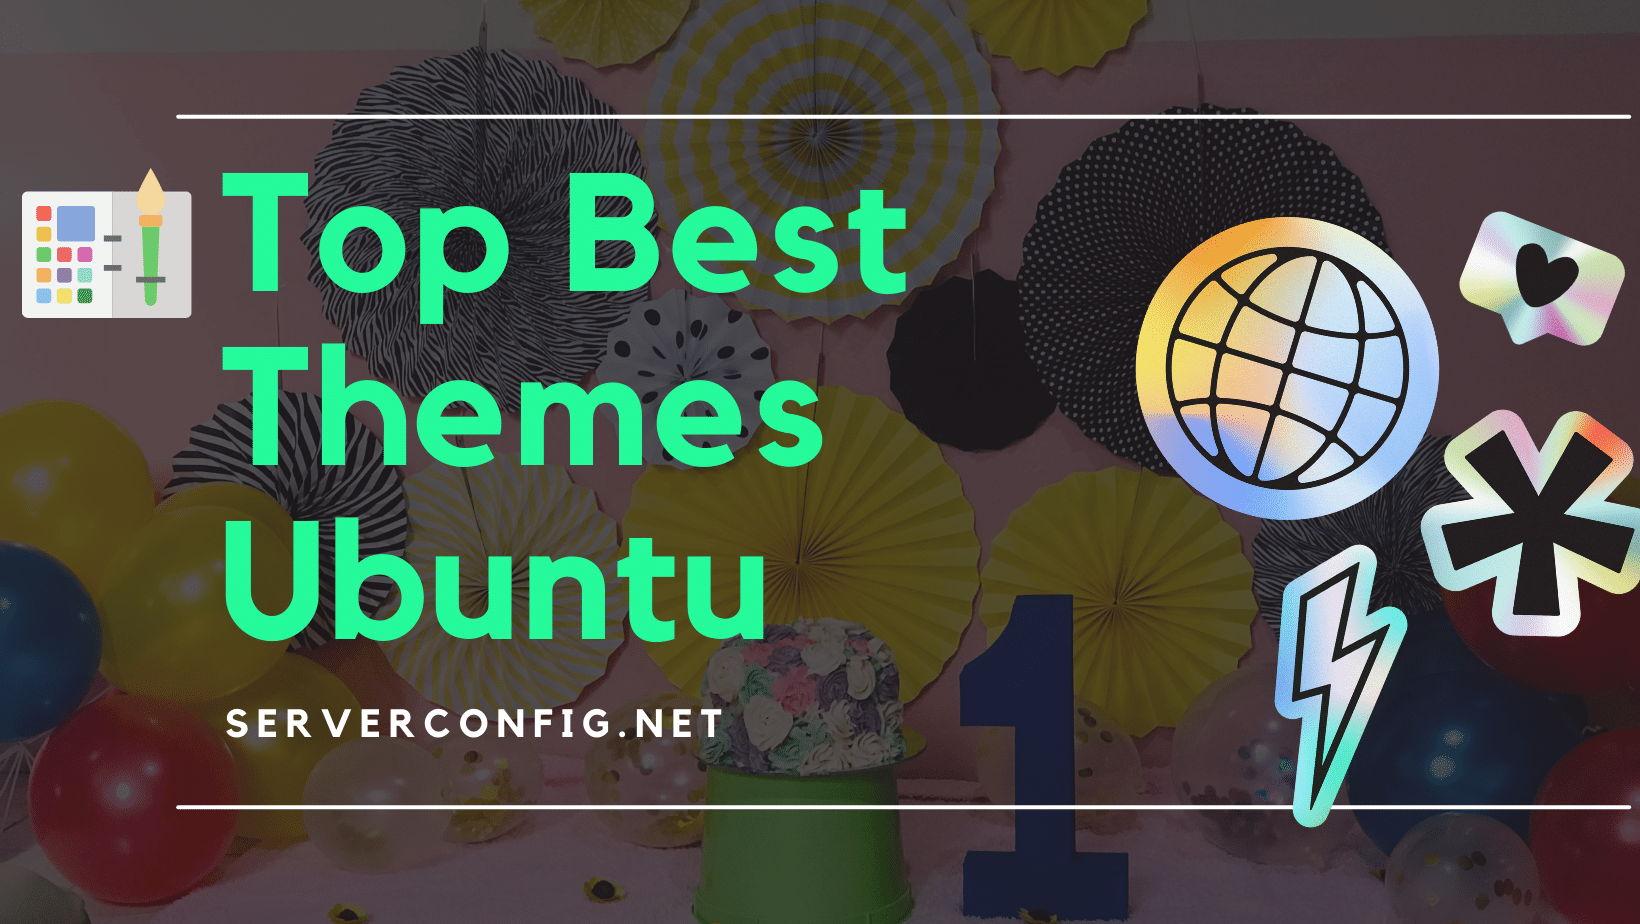 Top Best Themes Ubuntu